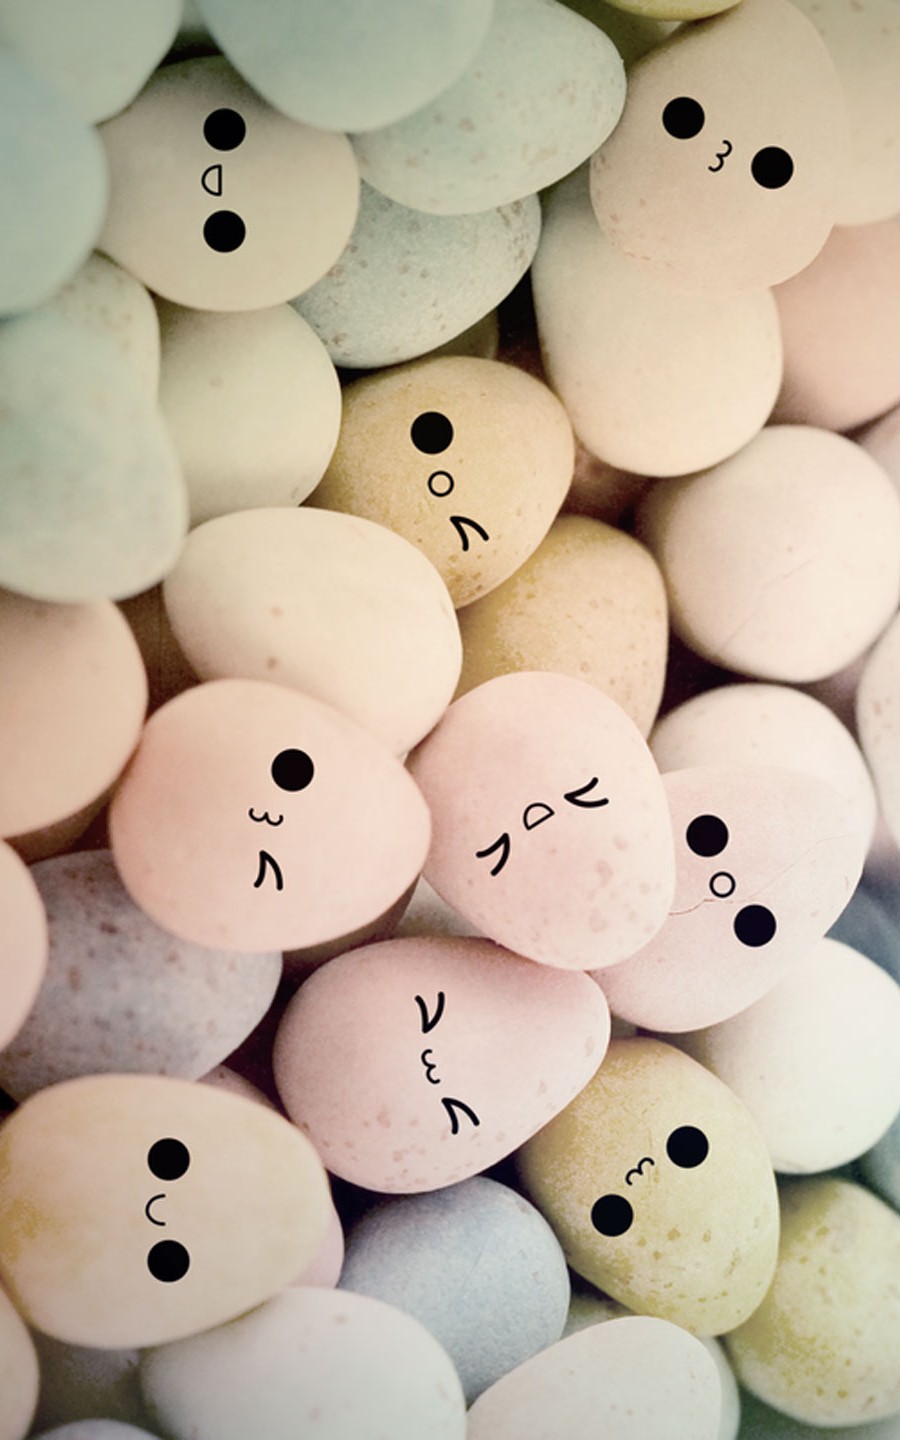 Cute Eggs With Faces Desktop Wallpaper